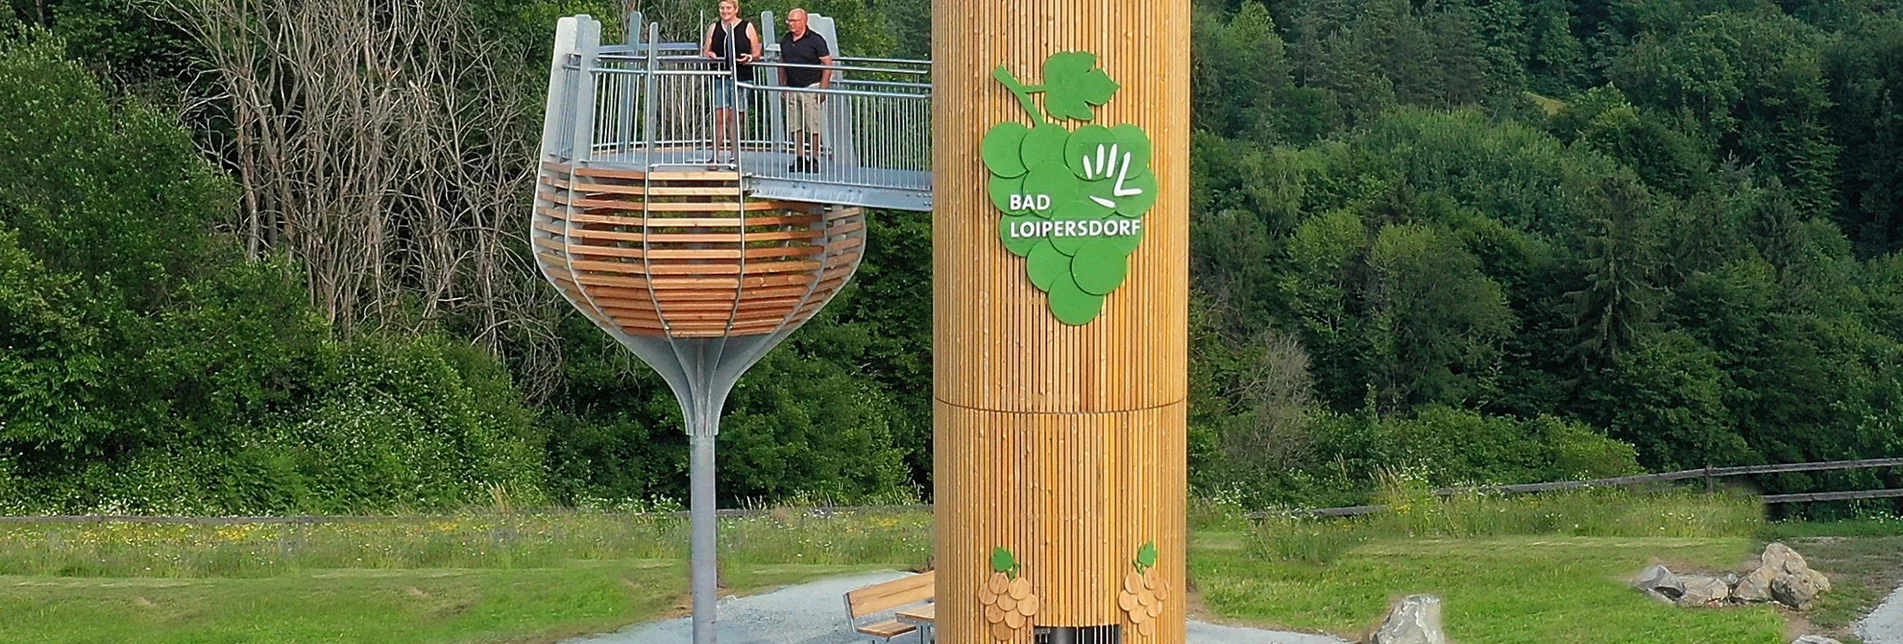 Nature Trail Wine Experience Trail (Wein-Erlebnis-Weg) Bad Loipersdorf - Touren-Impression #1 | © Gemeinde Bad Loipersdorf